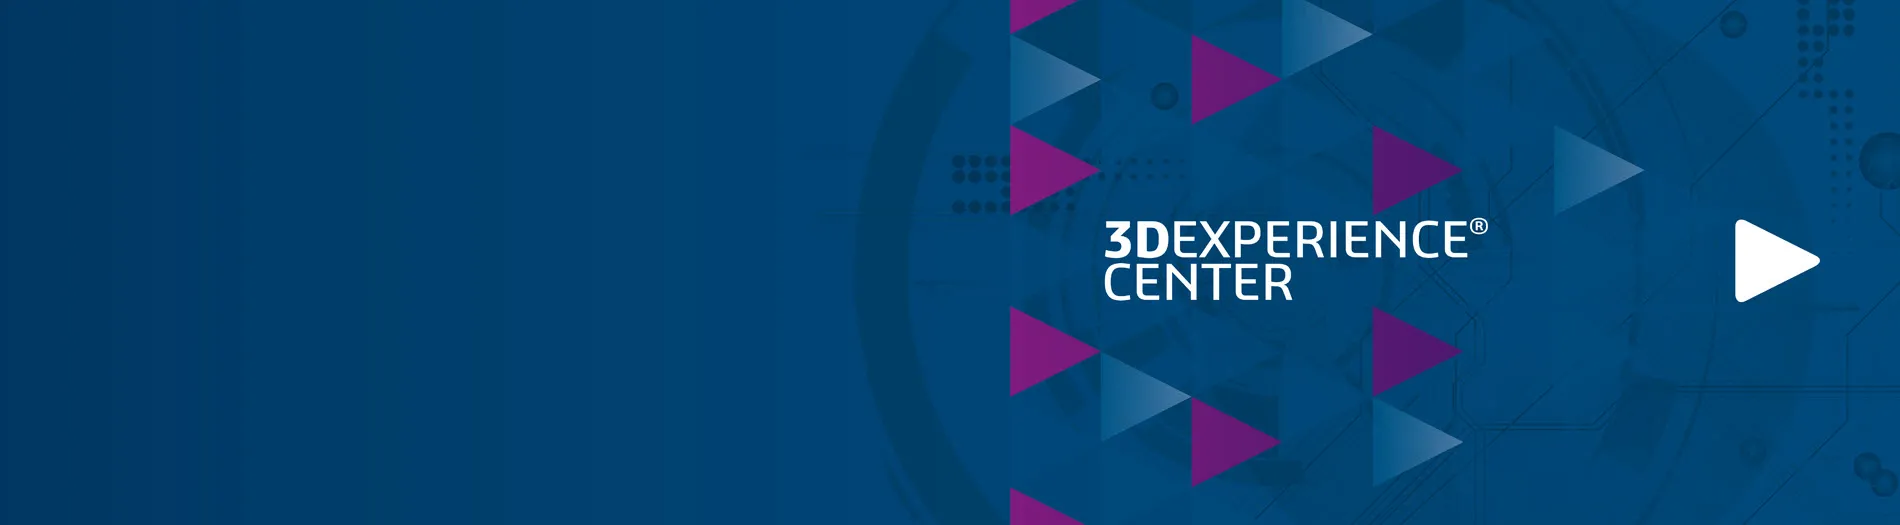 3DExperience-Center Munich > Dassault Systèmes